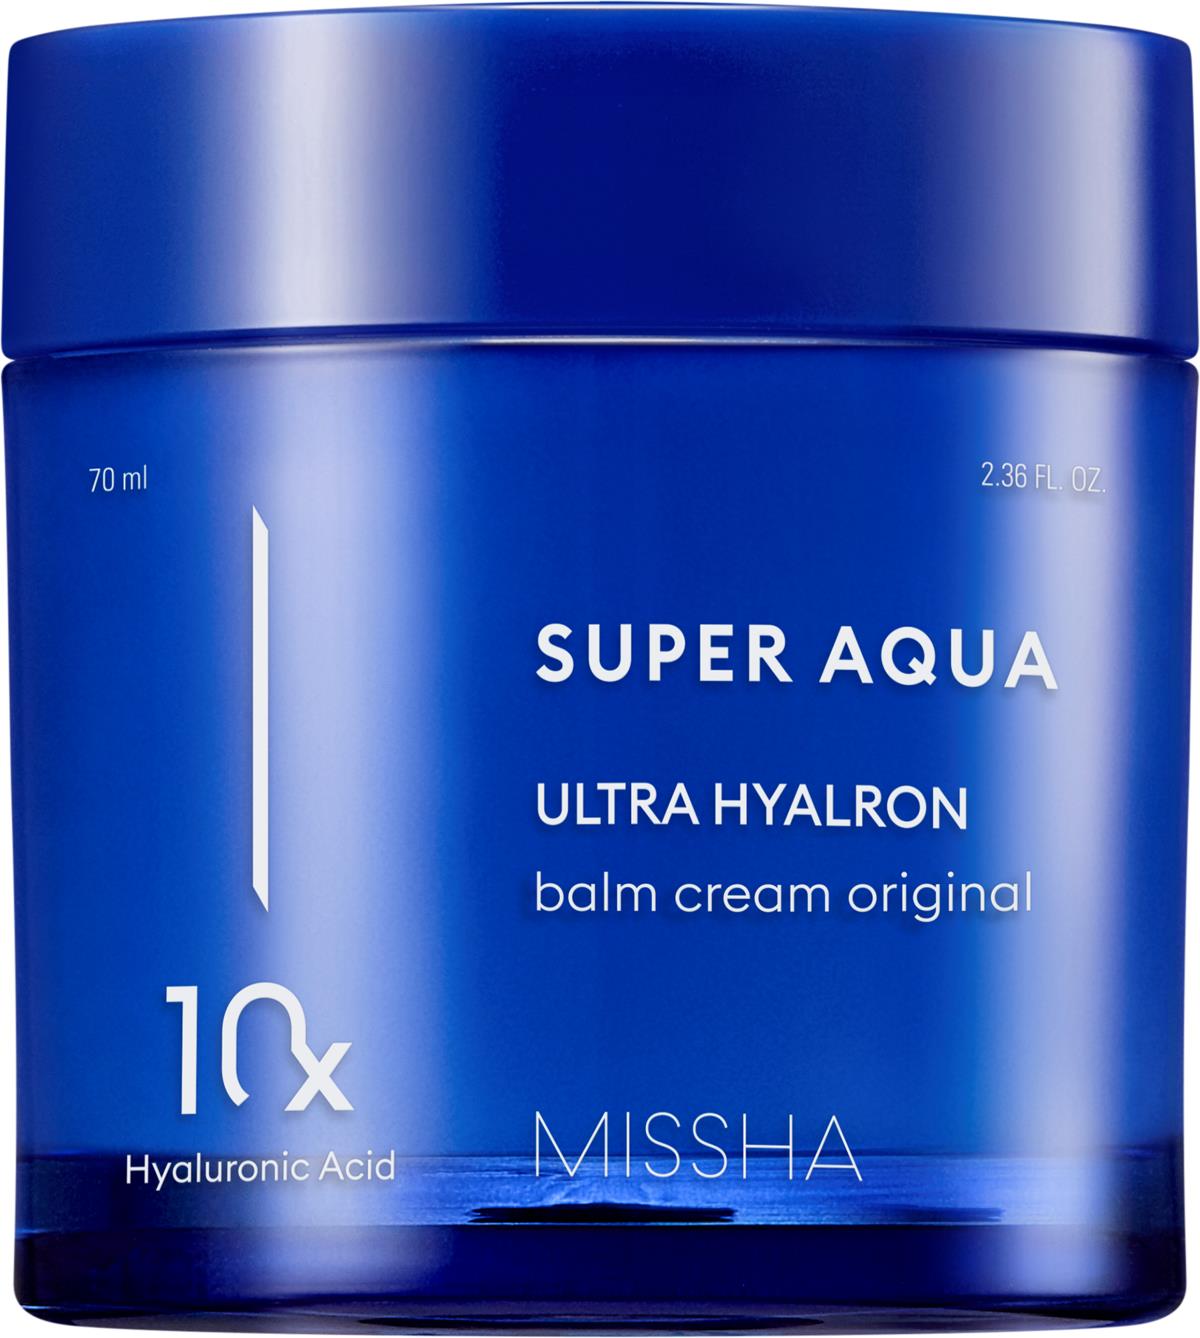 MISSHA Super Aqua Ultra Hyalron Balm Cream 70 ml | lyko.com